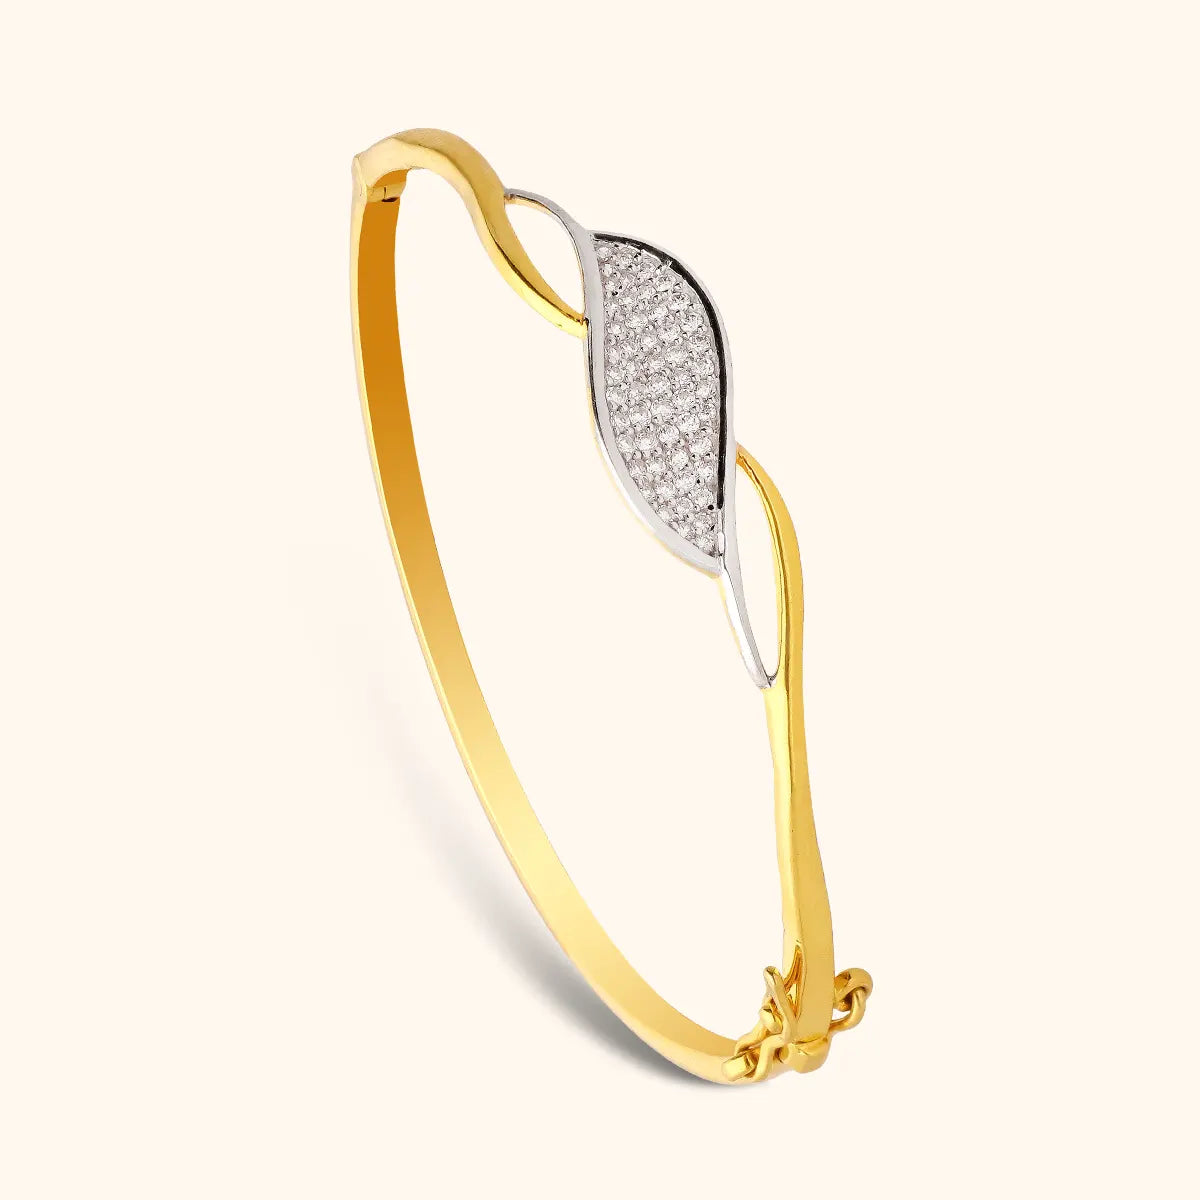 Elegant Triple Sphere Gold Bracelet - Delicate Chain Link Wrist Adornment -  BR-528